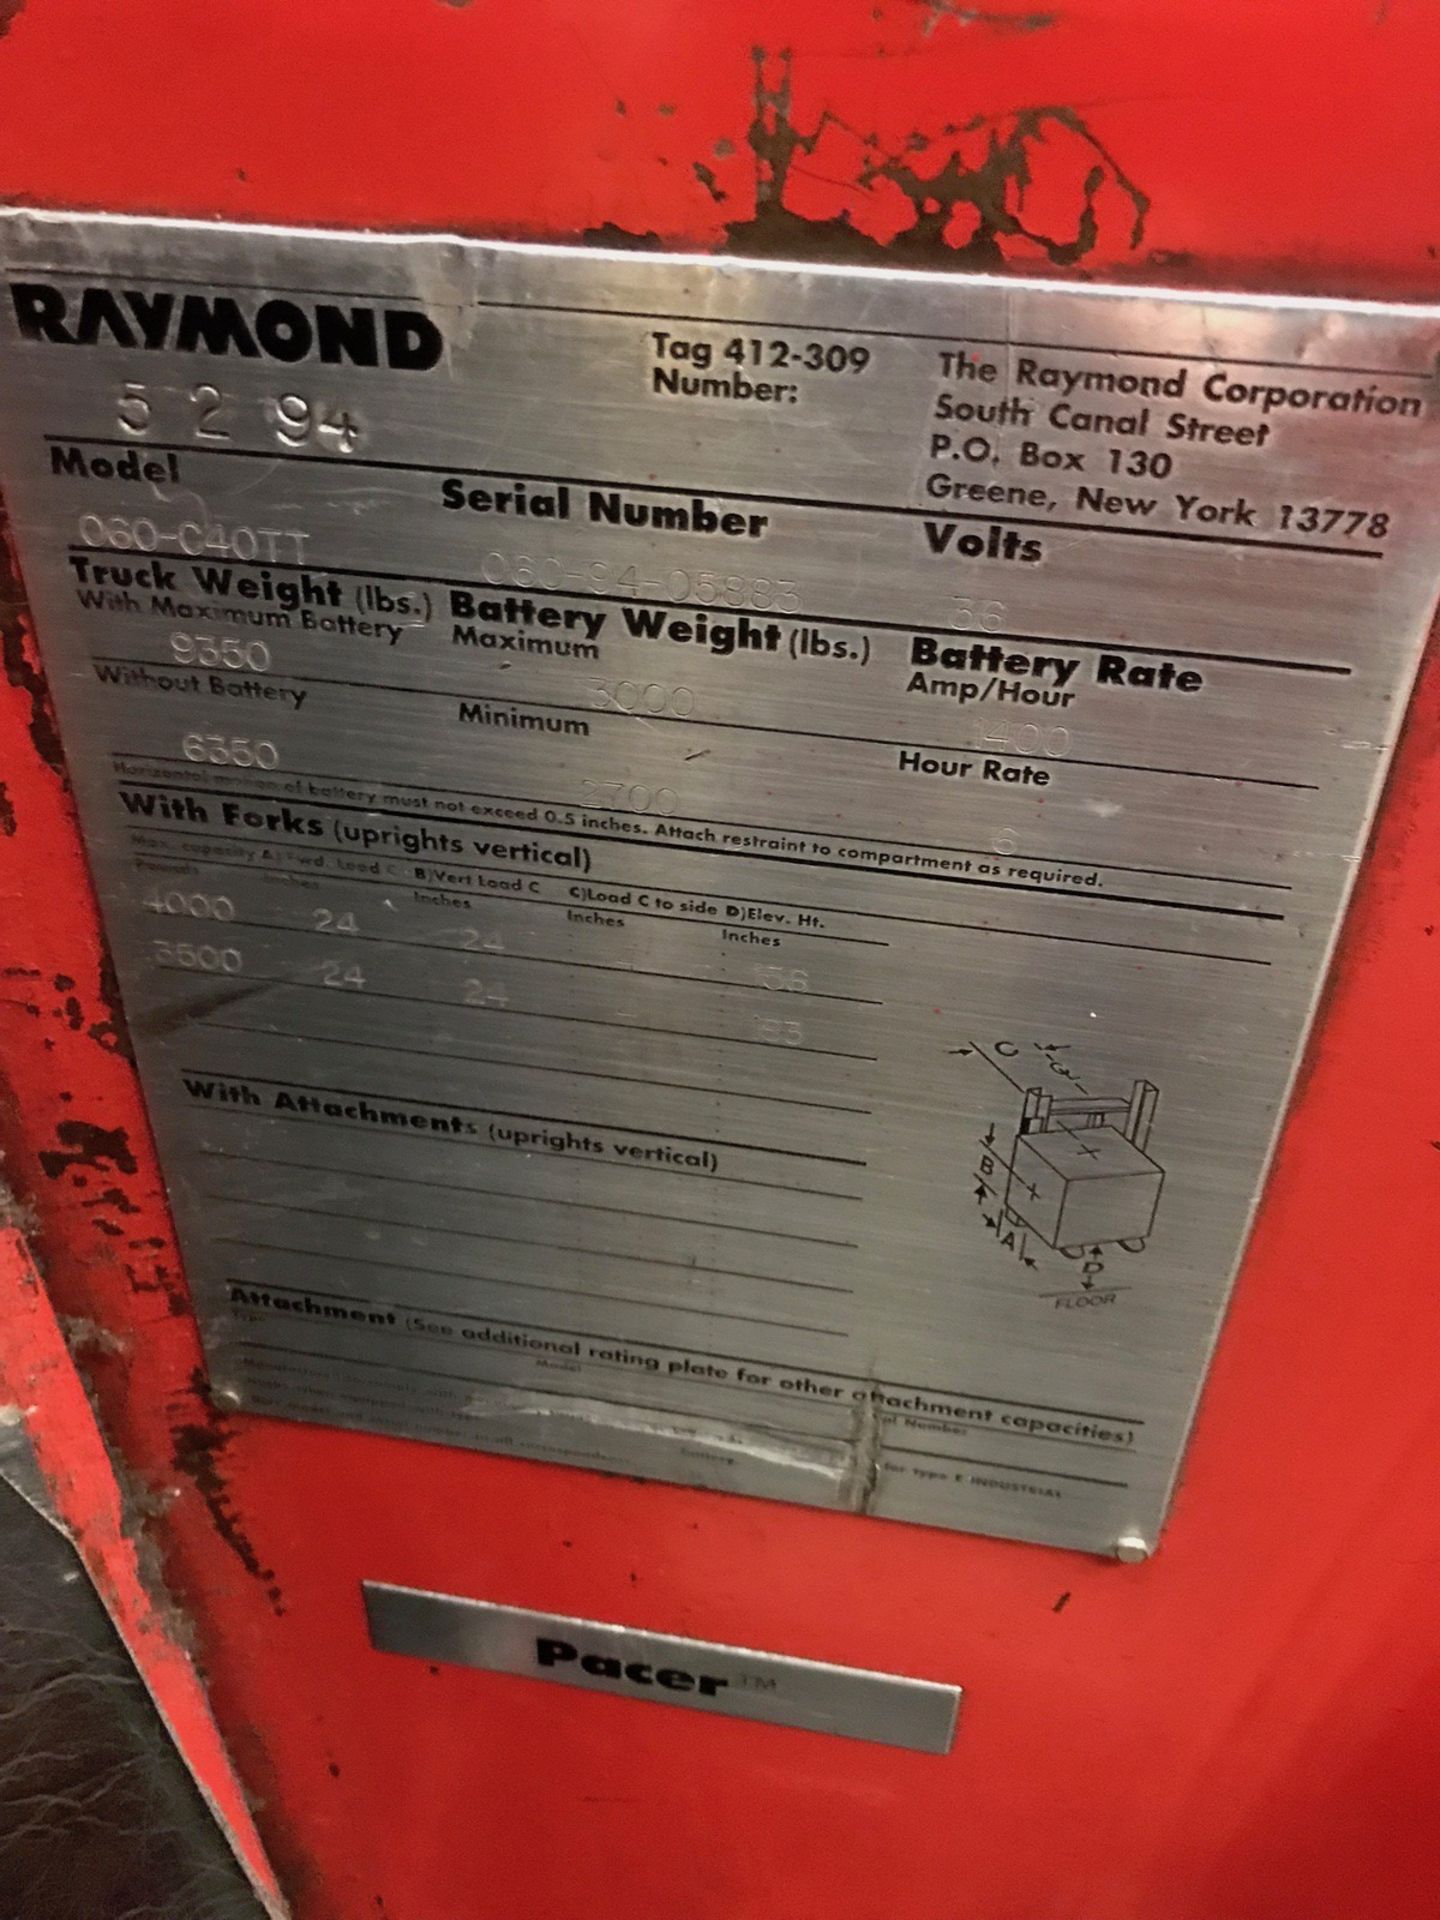 Raymond Electric Forklift Model 060-C40TT | Rig Fee: $150 - Image 2 of 2